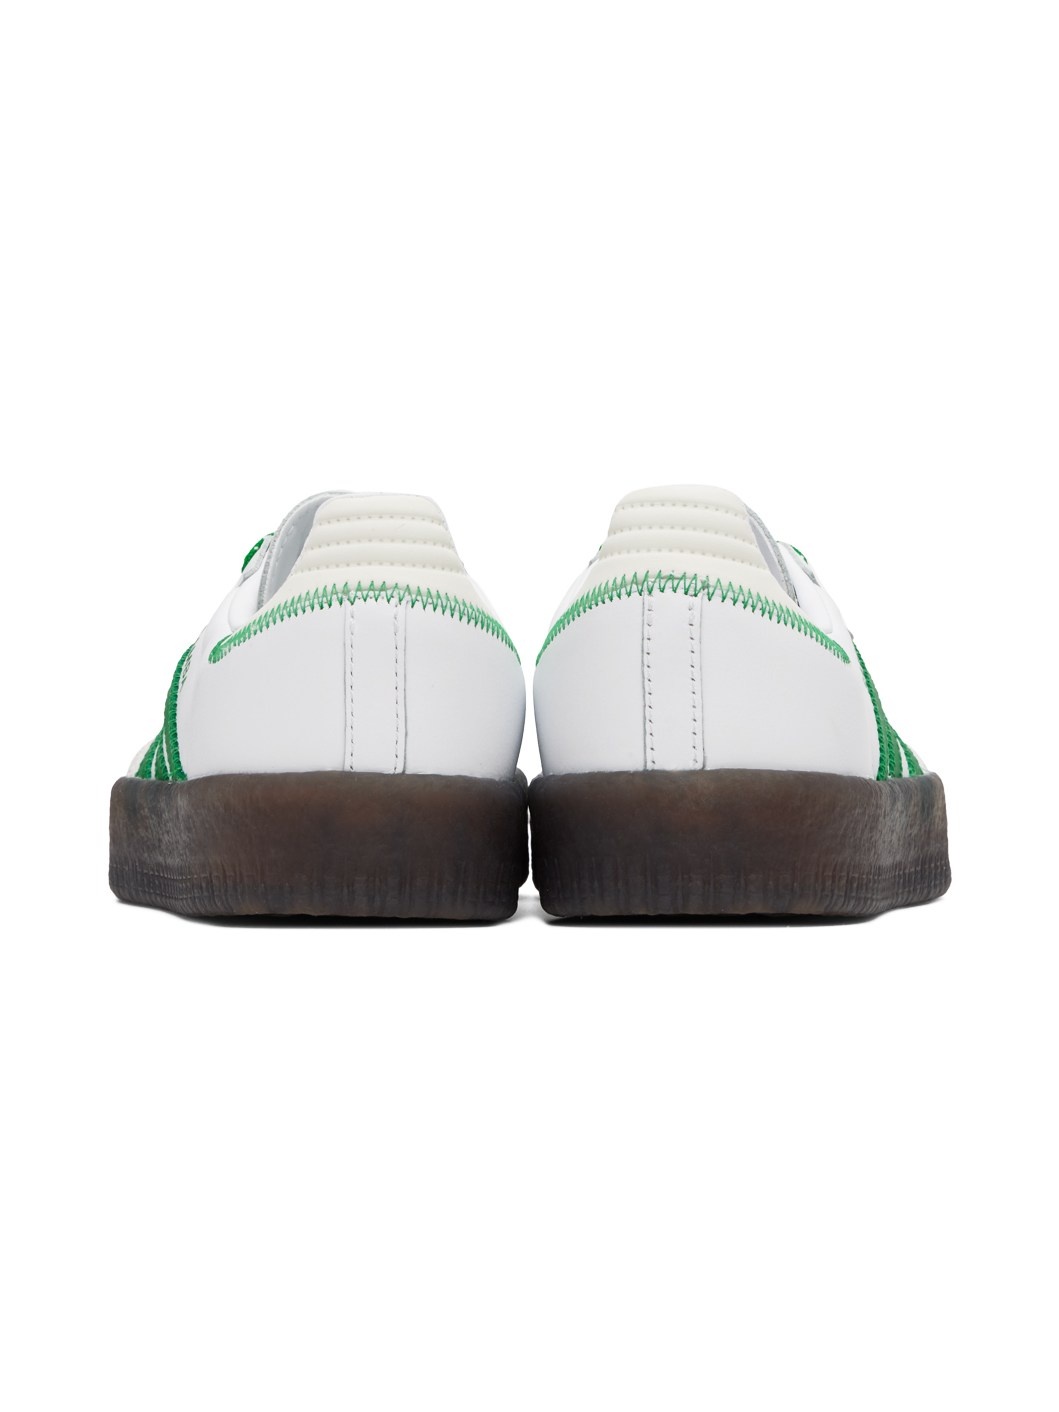 White & Green Sambae Sneakers - 2